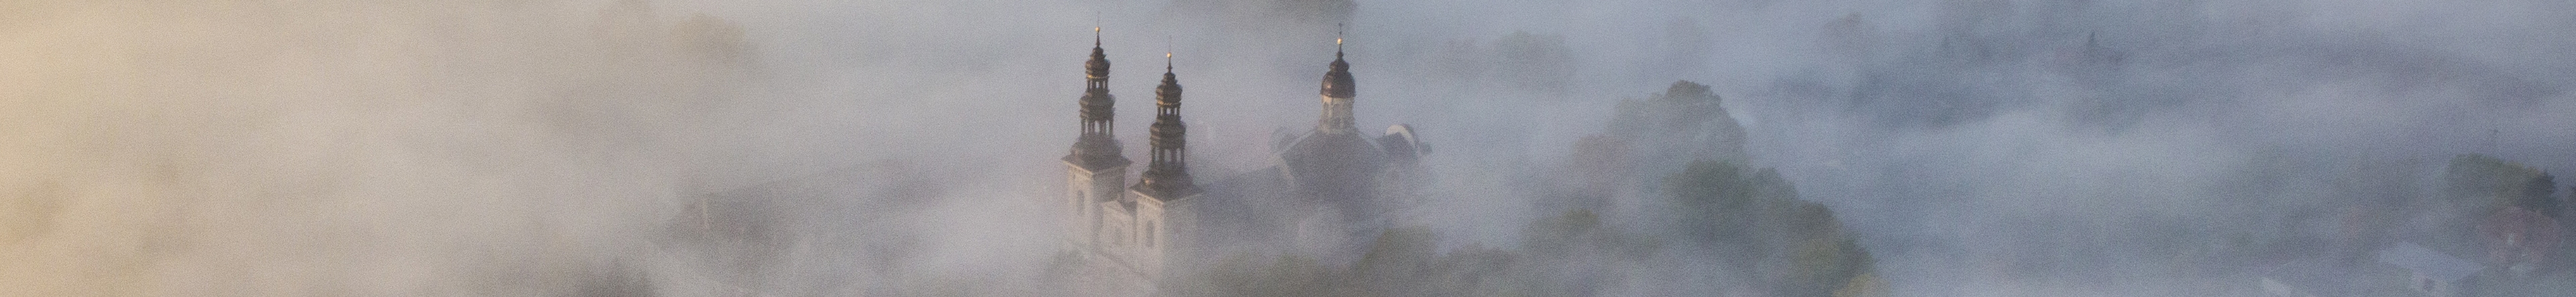 Ląd nad Wartą – widok z lotu ptaka na klasztor we mgle